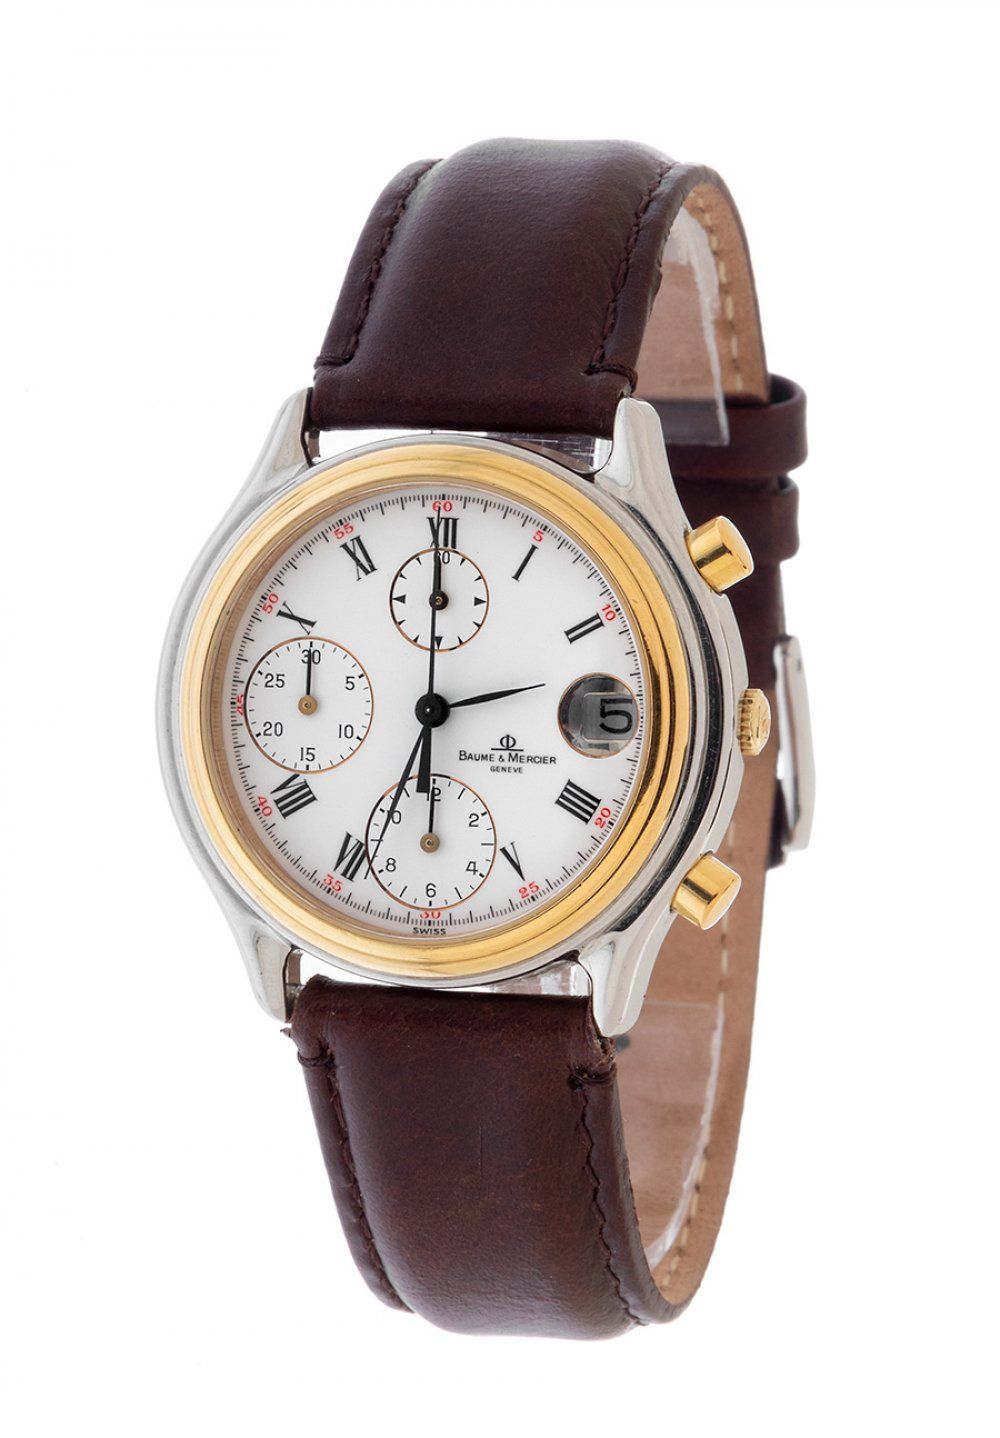 BAUME & MERCIER Chronographe Baumatic watch, ref. 6103, for men/Unisex. Montre B&hellip;